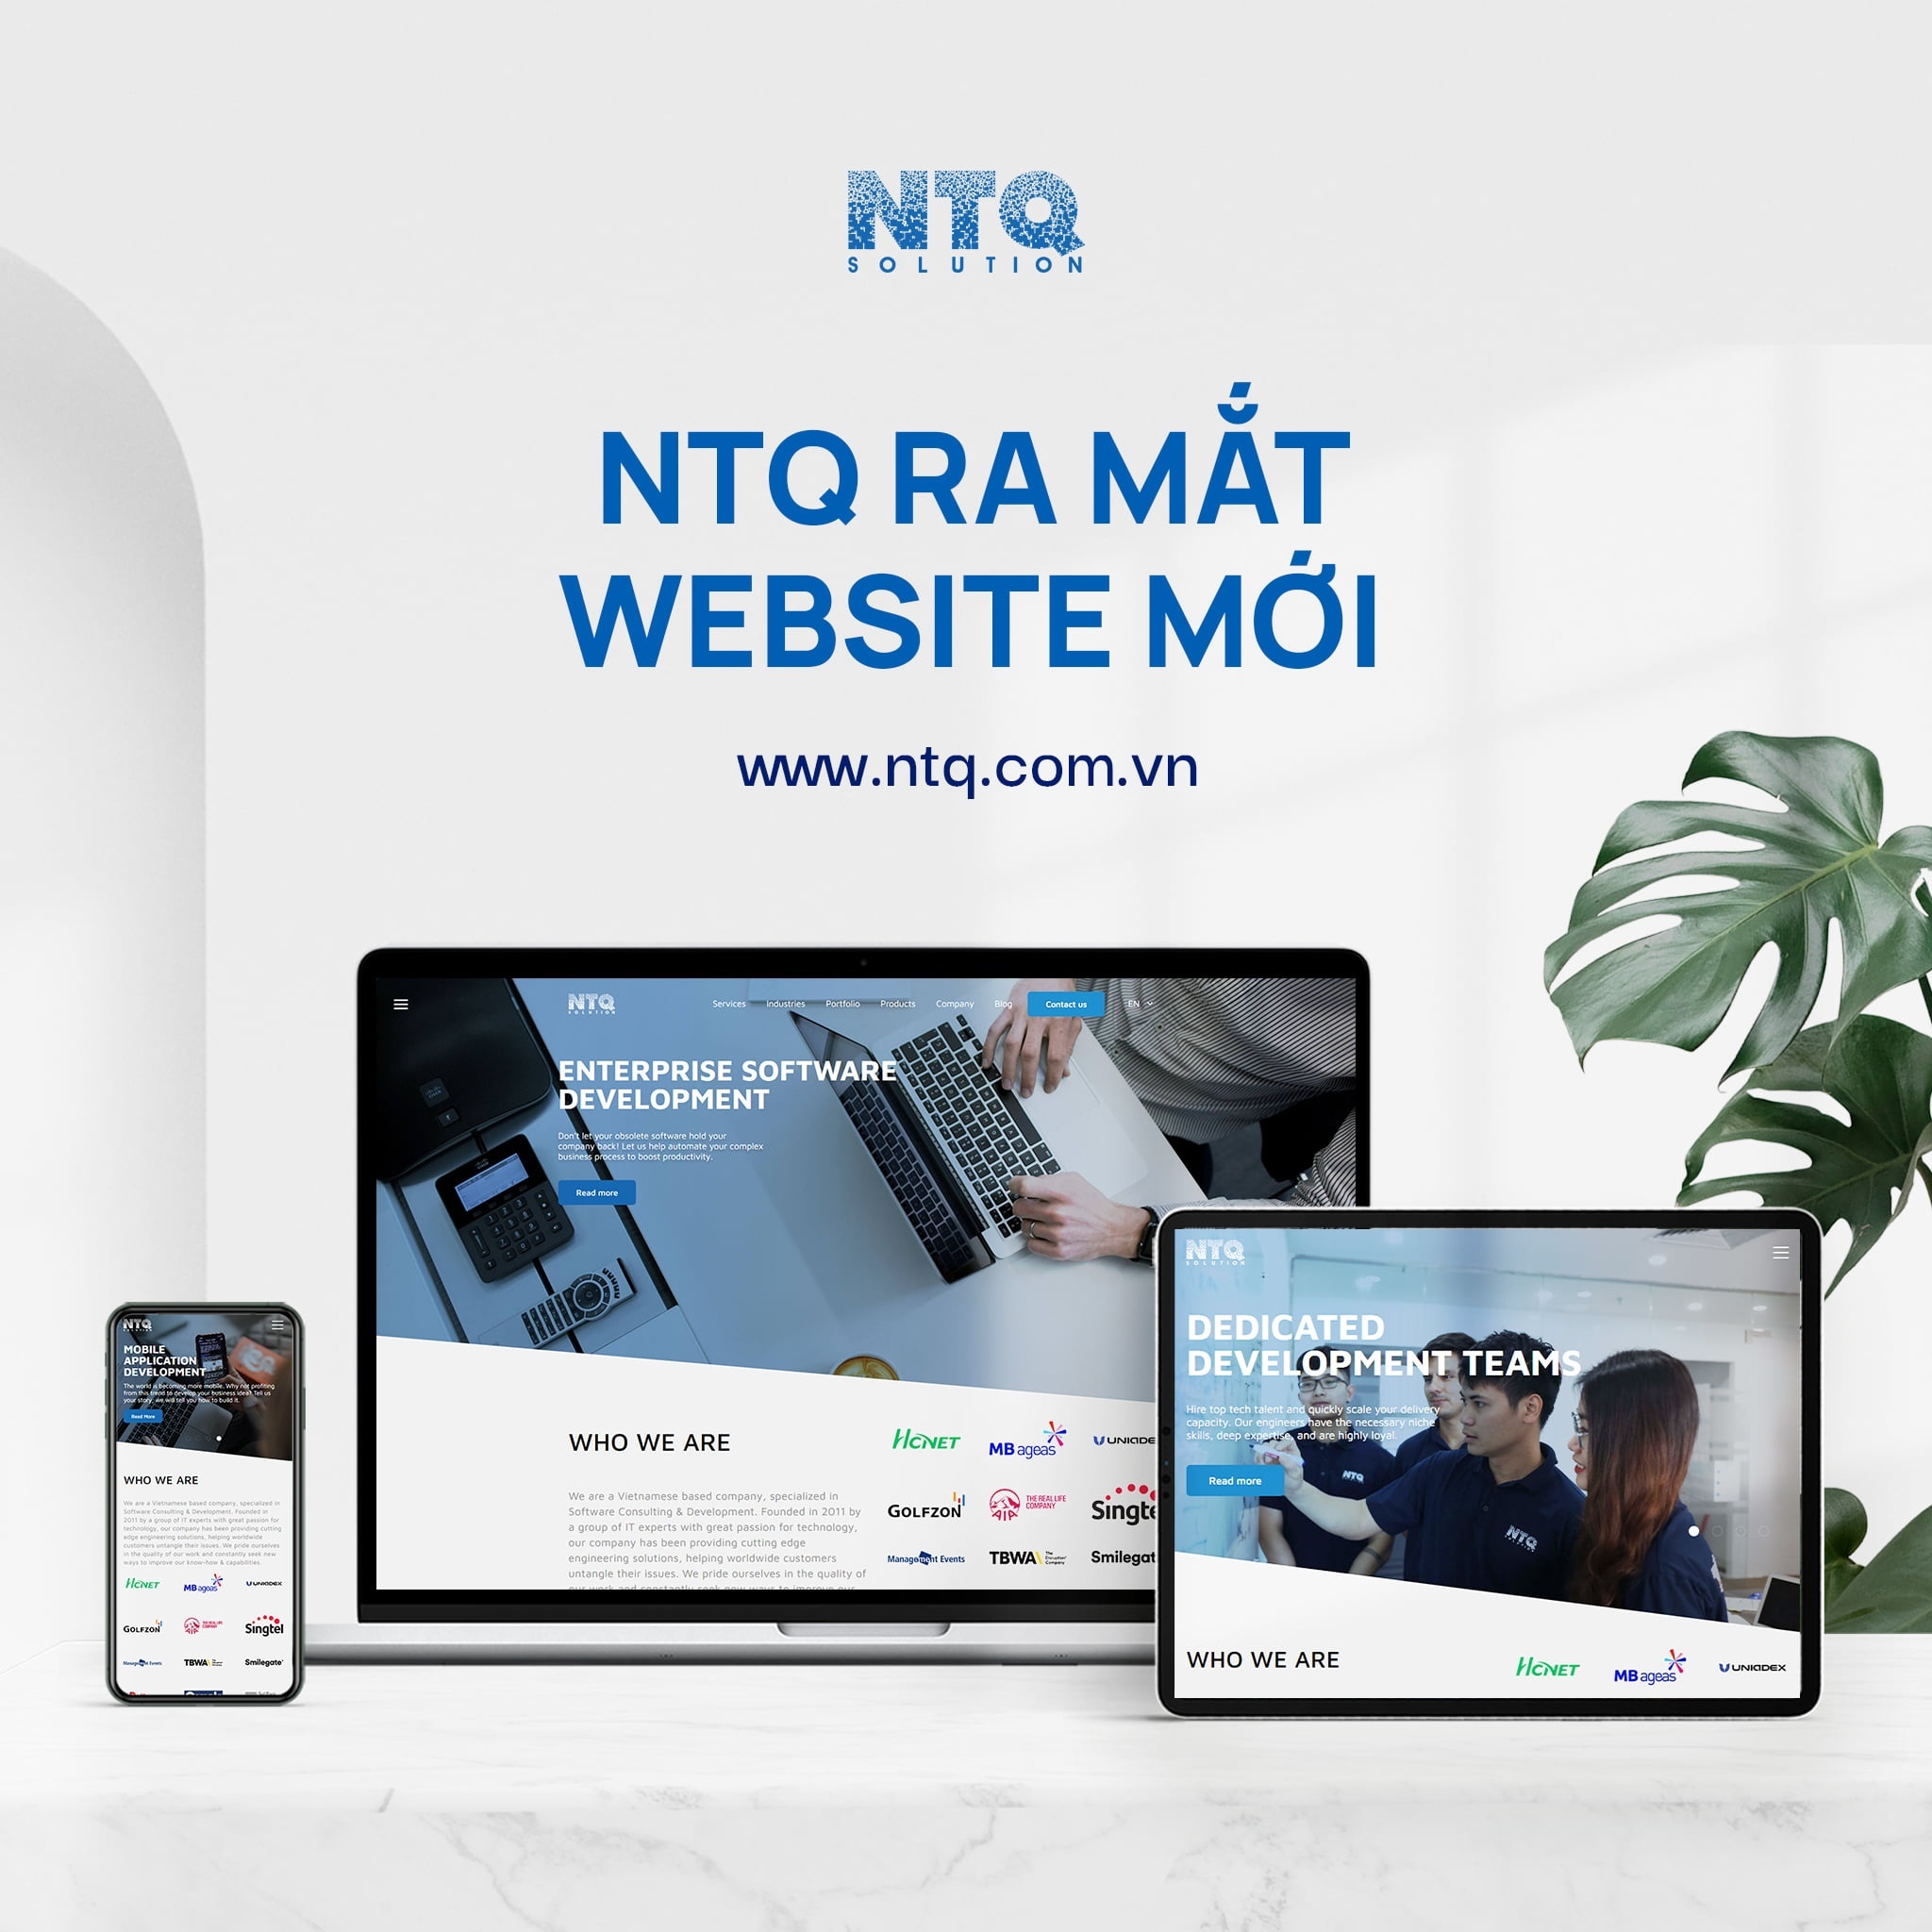 NTQ solution new website